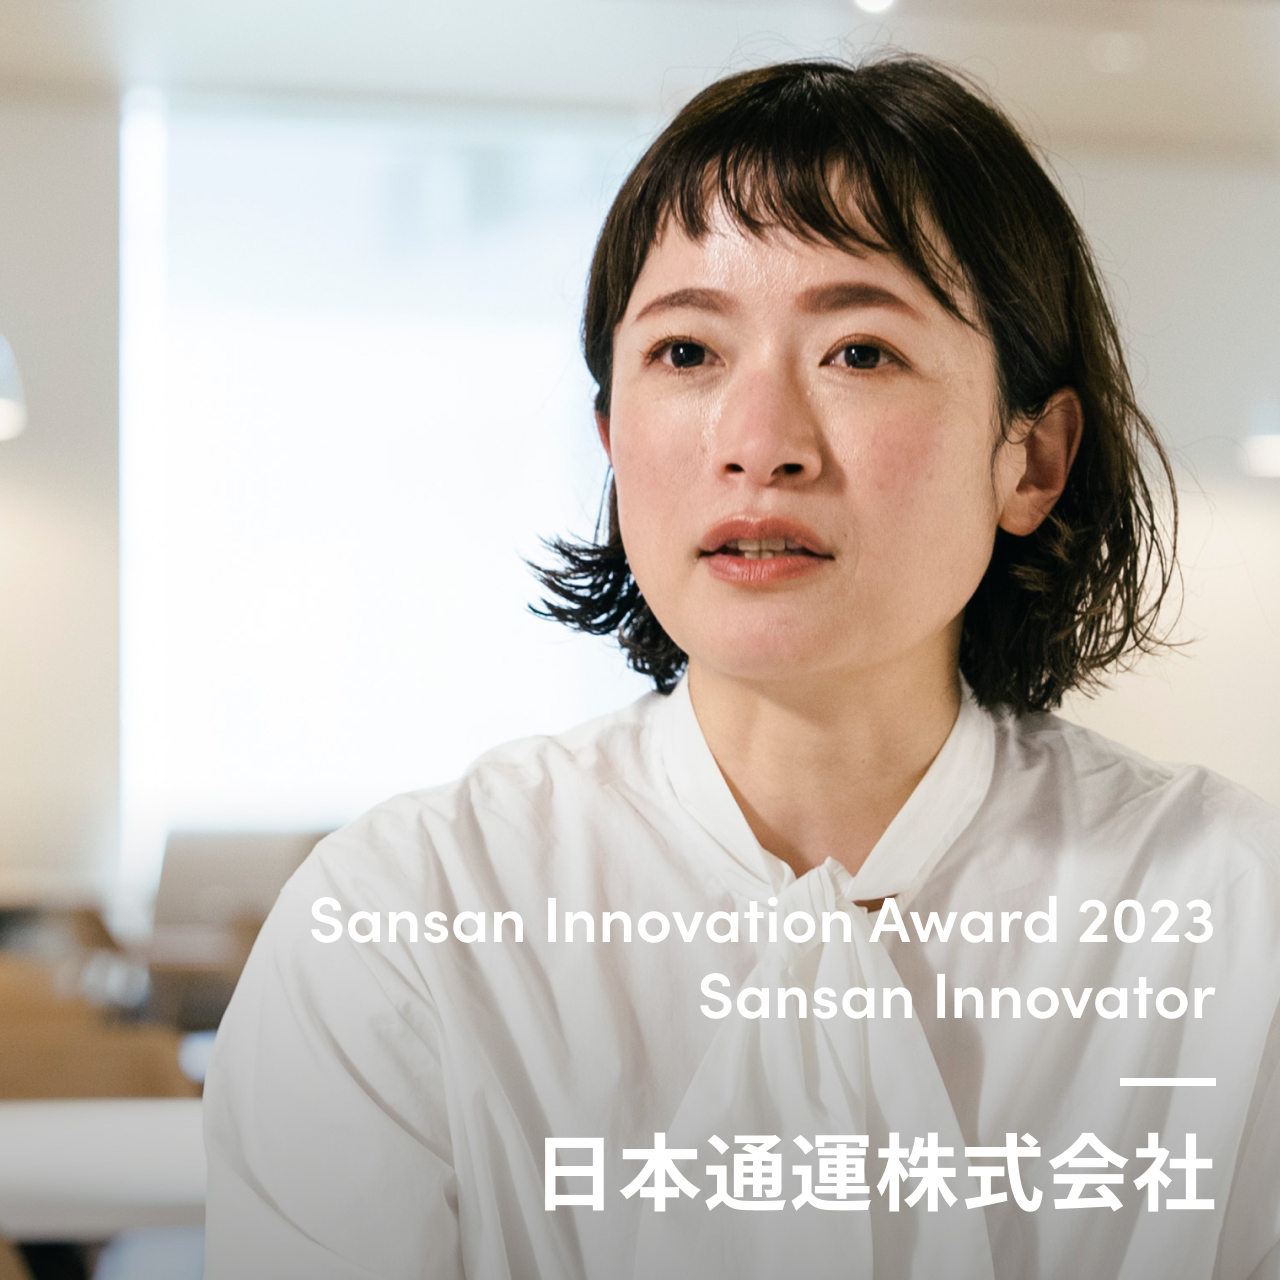 Sansan Innovator 日本通運株式会社